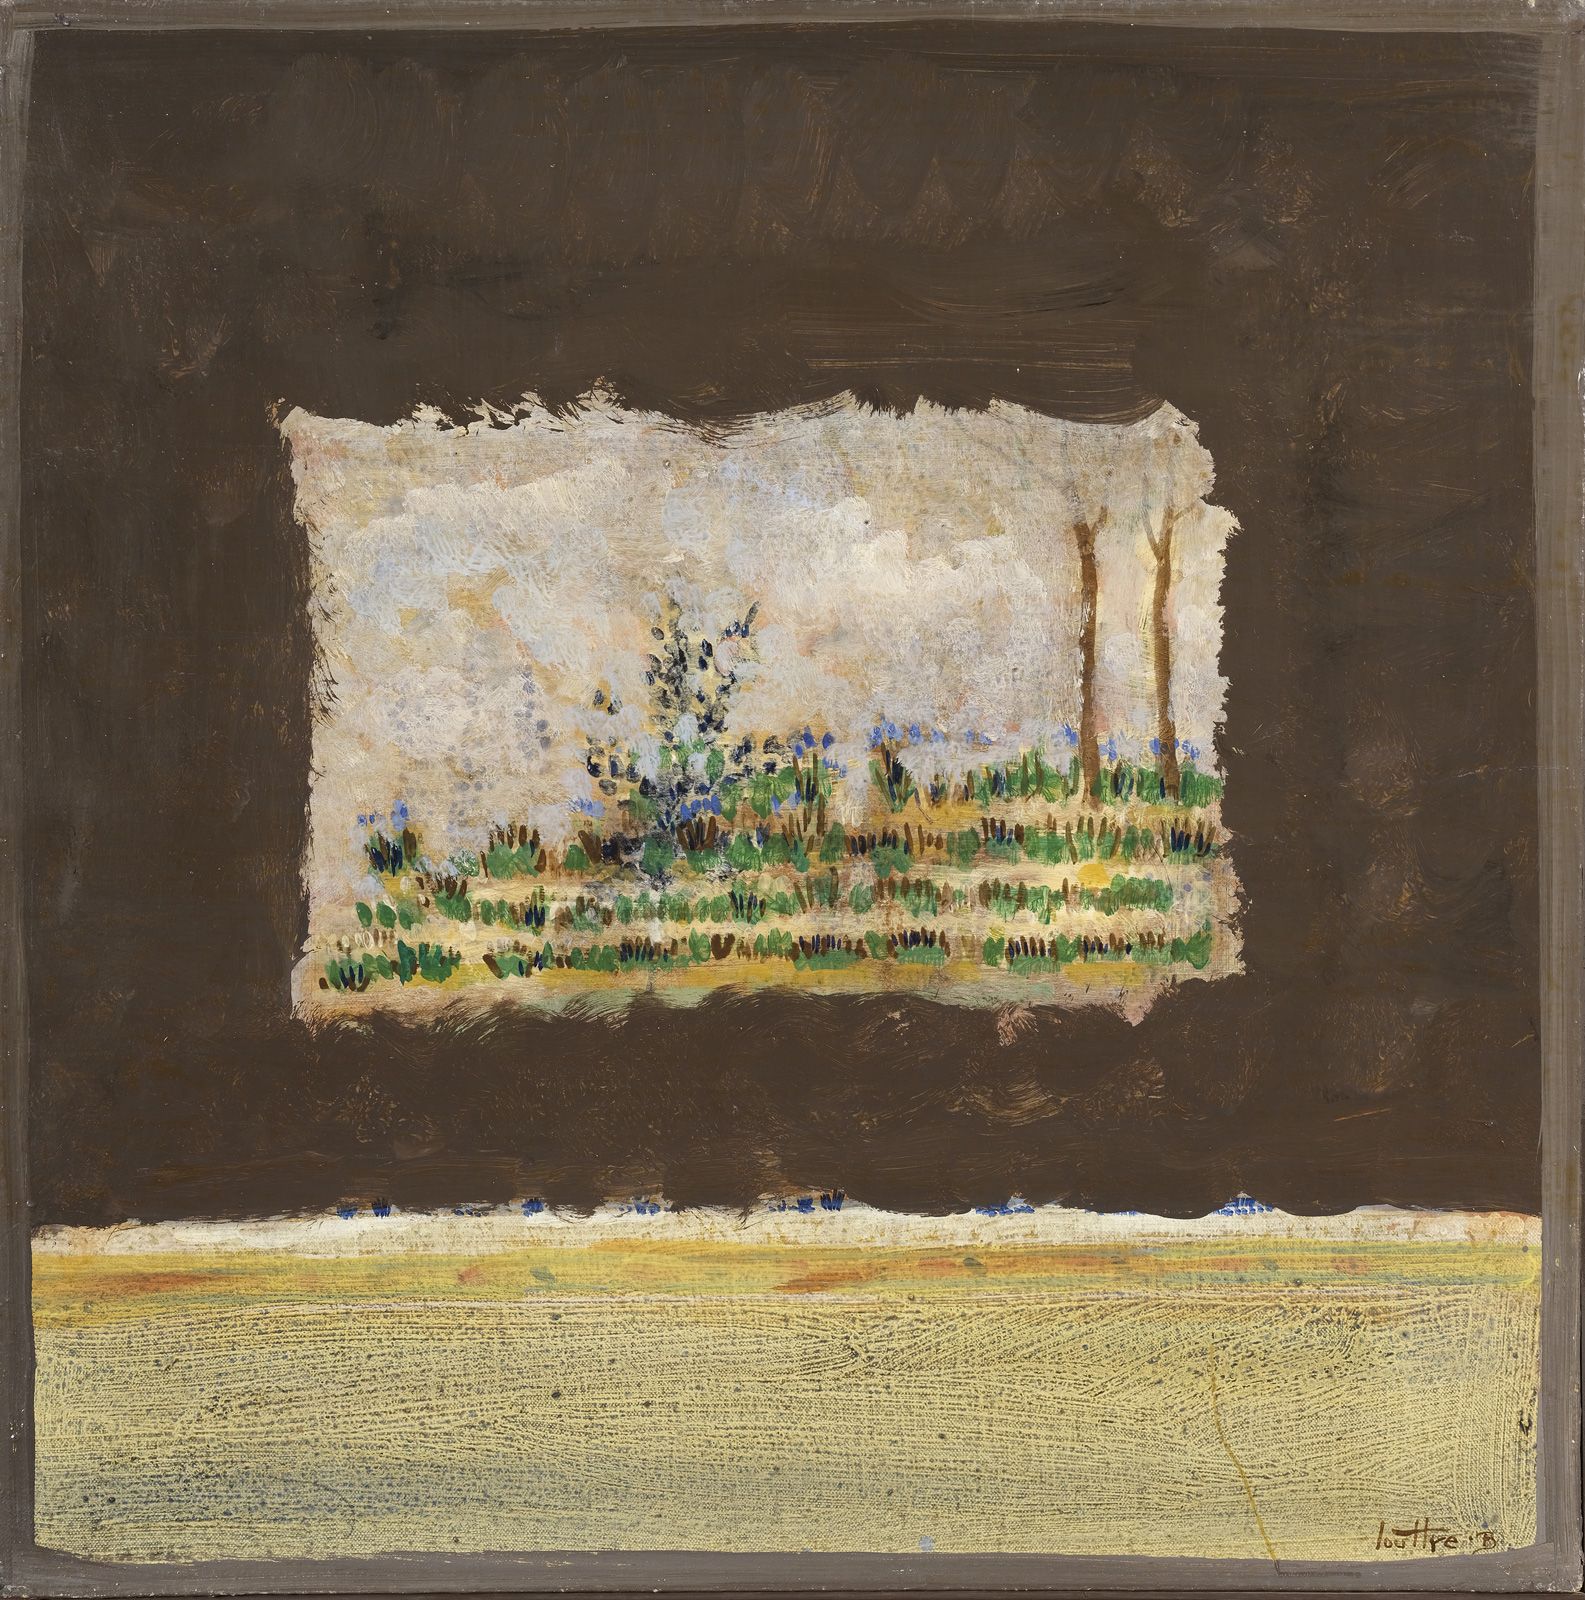 Null 沃尔夫拉姆(1926-2012)

1980年《花园》

布面油画，右下角有签名，背面有副署、题名和日期。

60 x 60厘米

证明：阿姆斯特丹K&hellip;